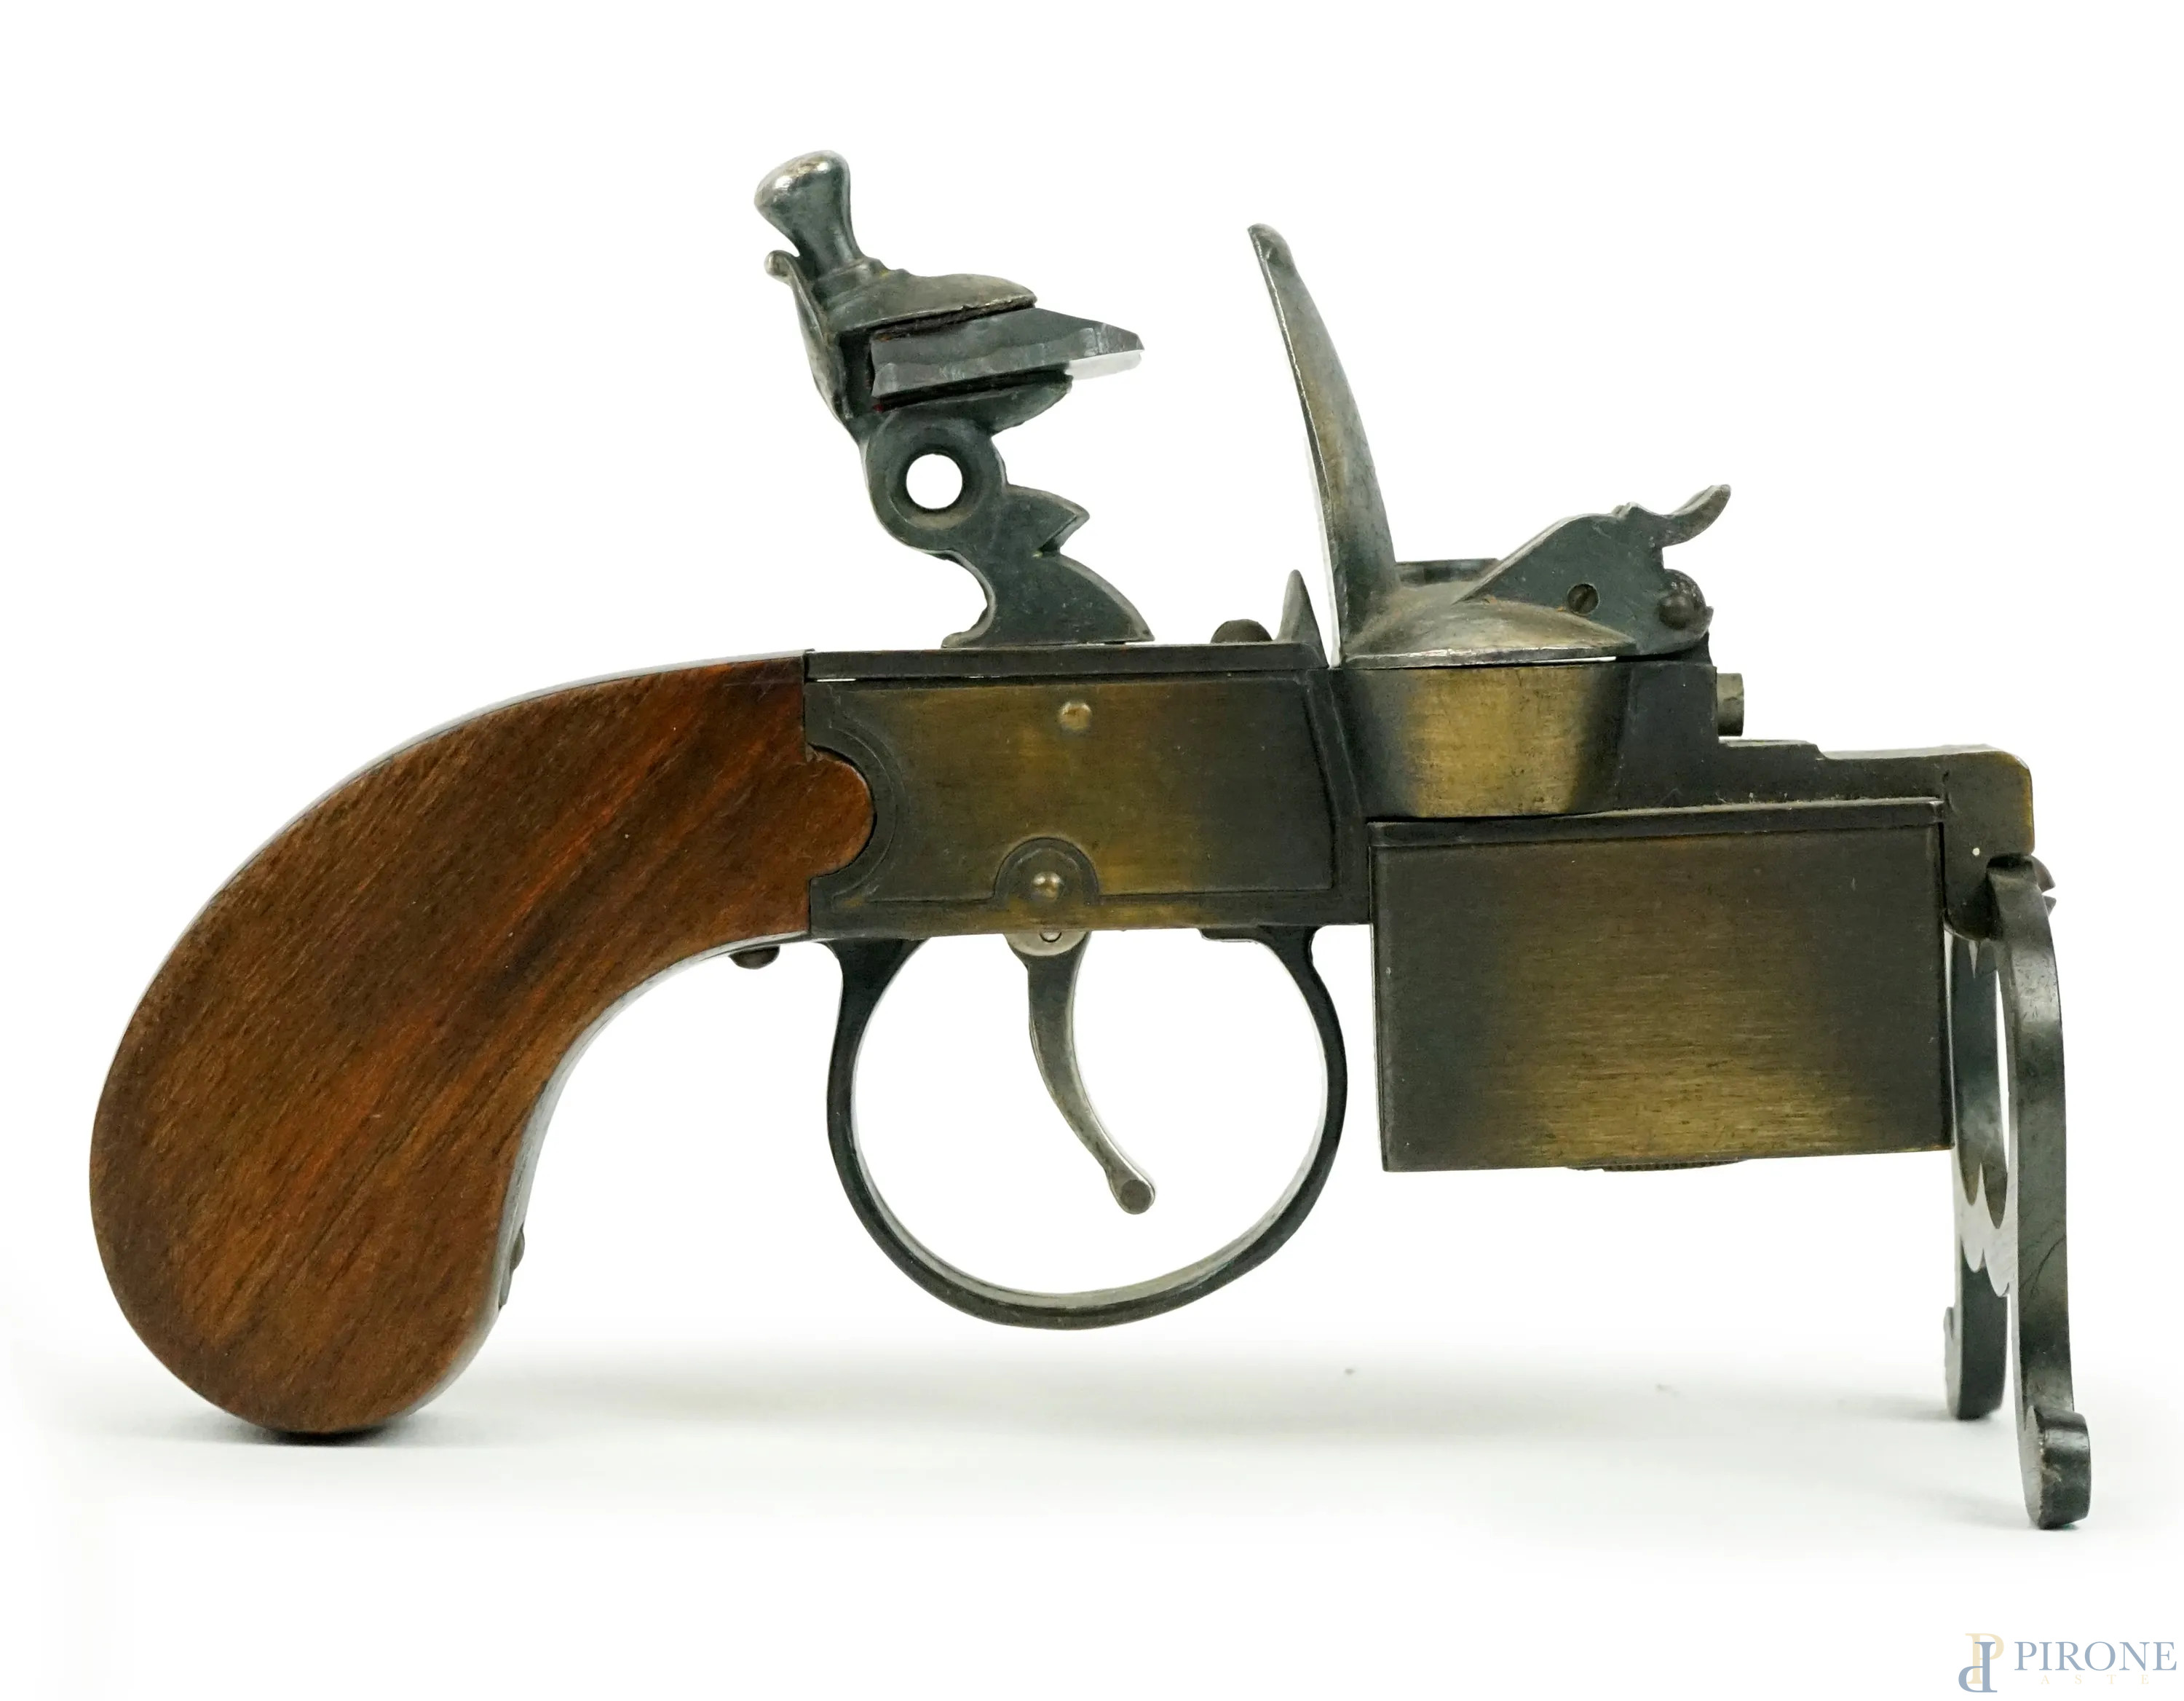 Dunhill Tinder Pistol, accendino a forma di pistola in legno e metallo, cm  h 10x15, XX secolo. - Asta ASTA A TEMPO - Aste Pirone